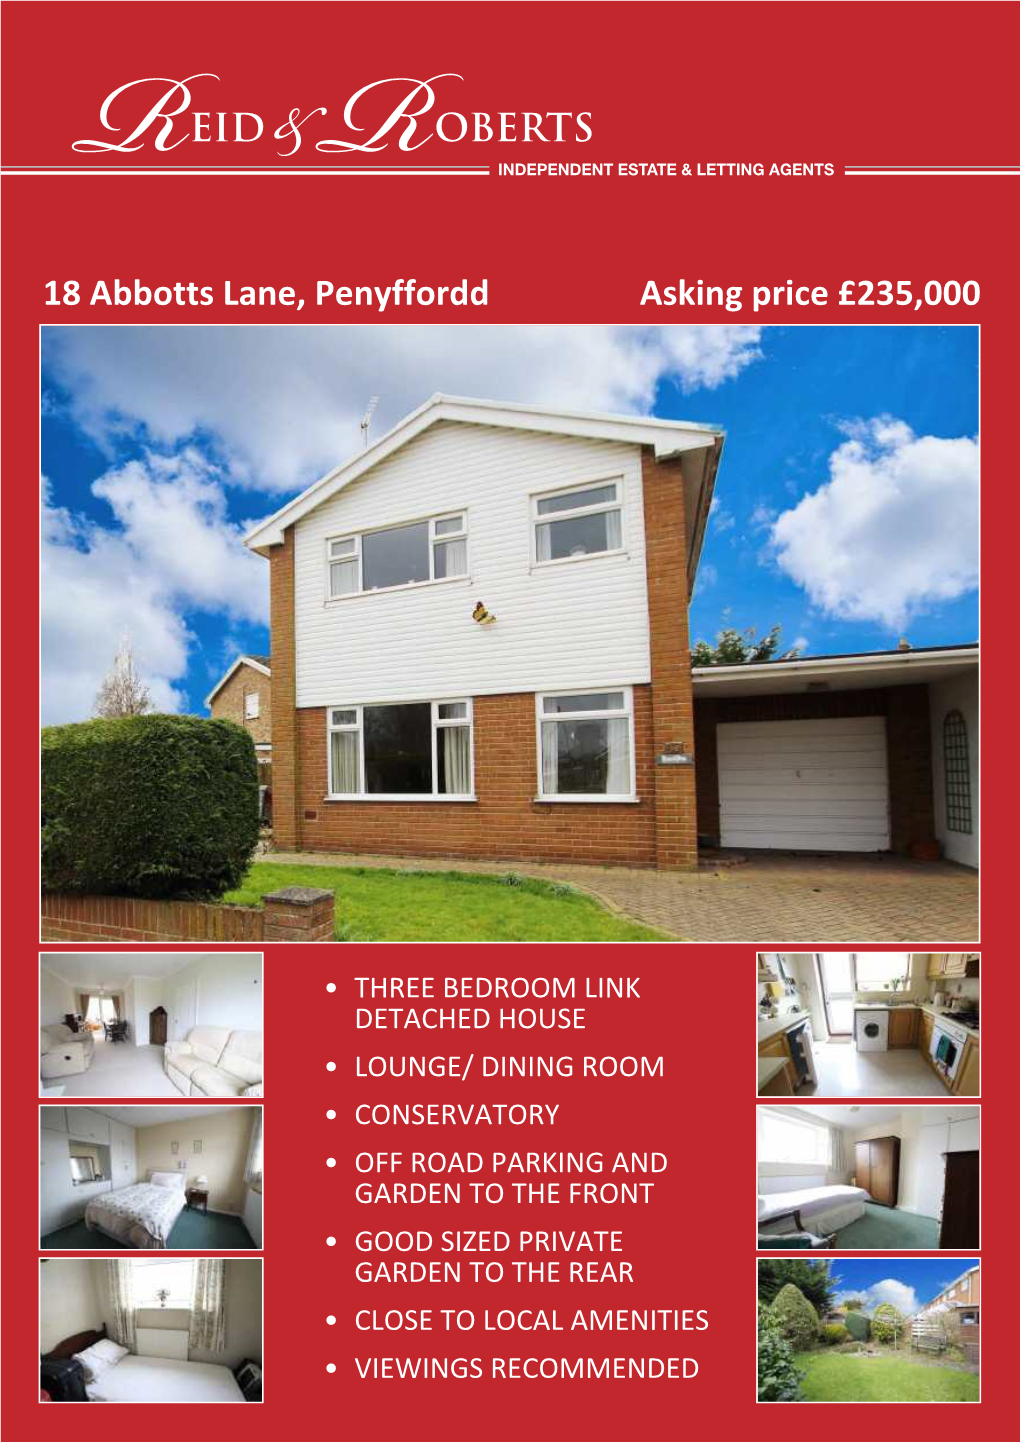 18 Abbotts Lane, Penyffordd Asking Price £235,000